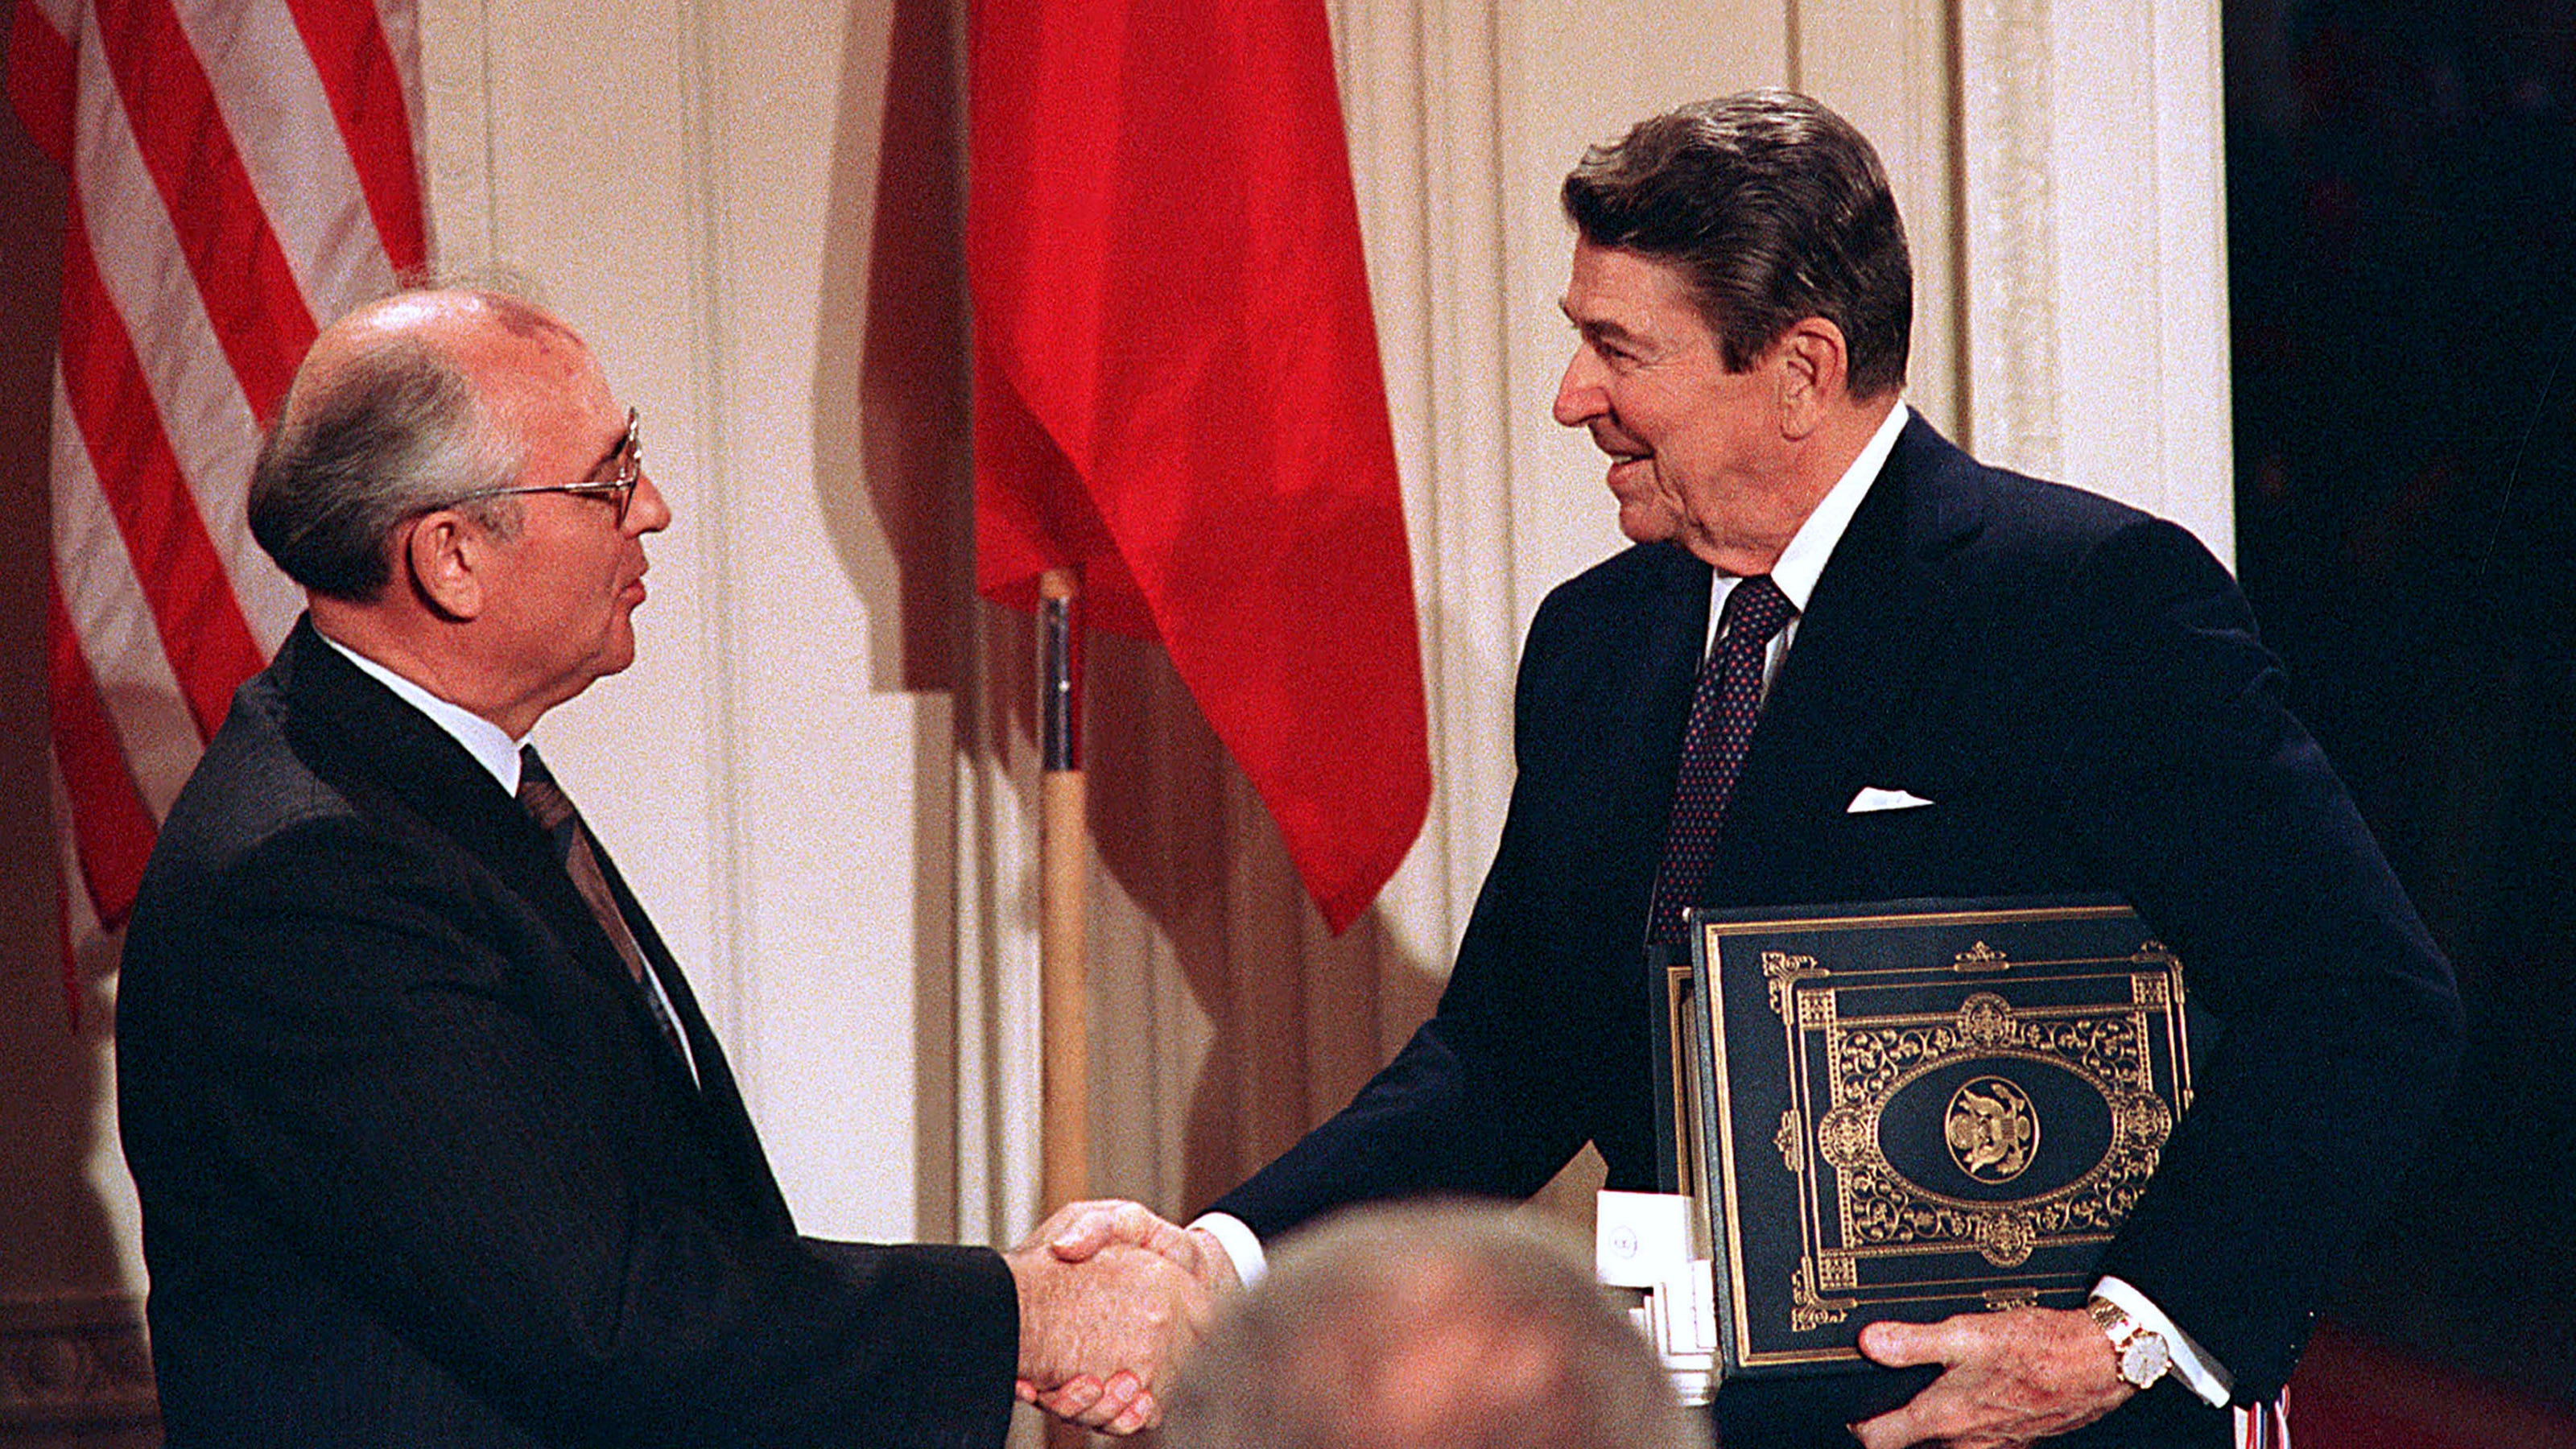 Переговоры с рейганом. Горбачев Рейган 1987 ДРСМД. Рейган Горбачев Вашингтон 1987. Саммит Рейган Горбачев 1987.